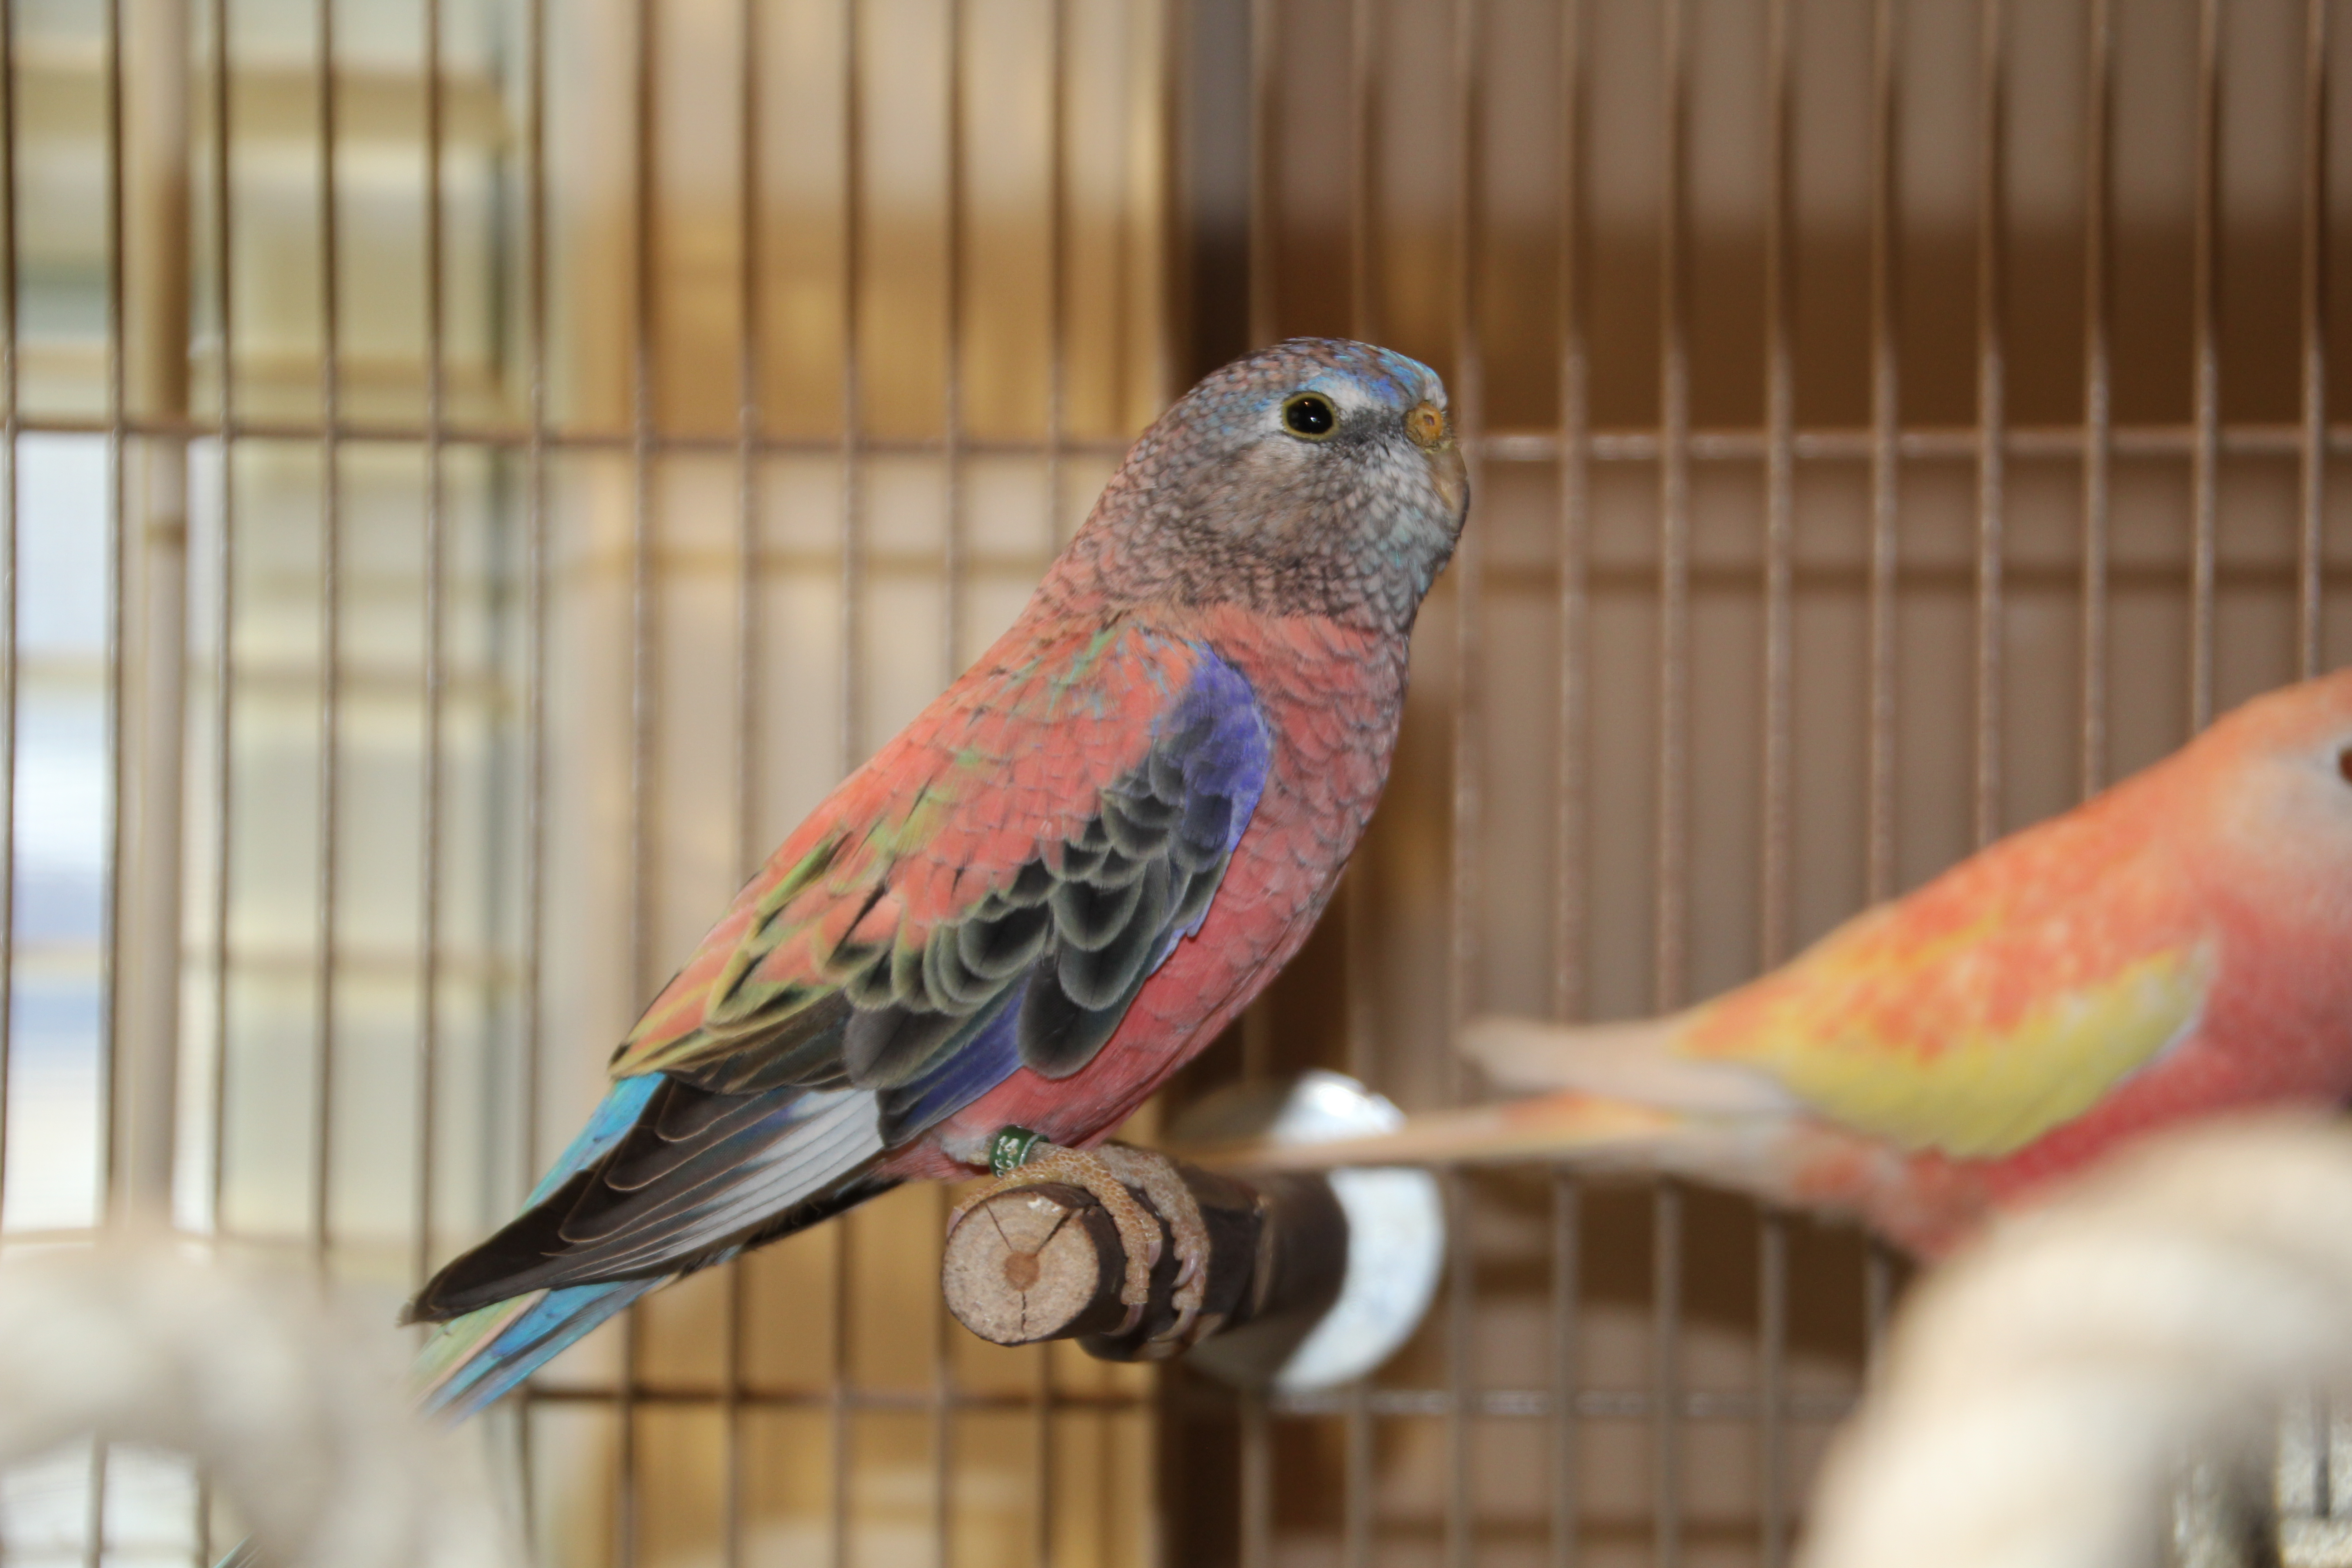 red rump parakeet mutations